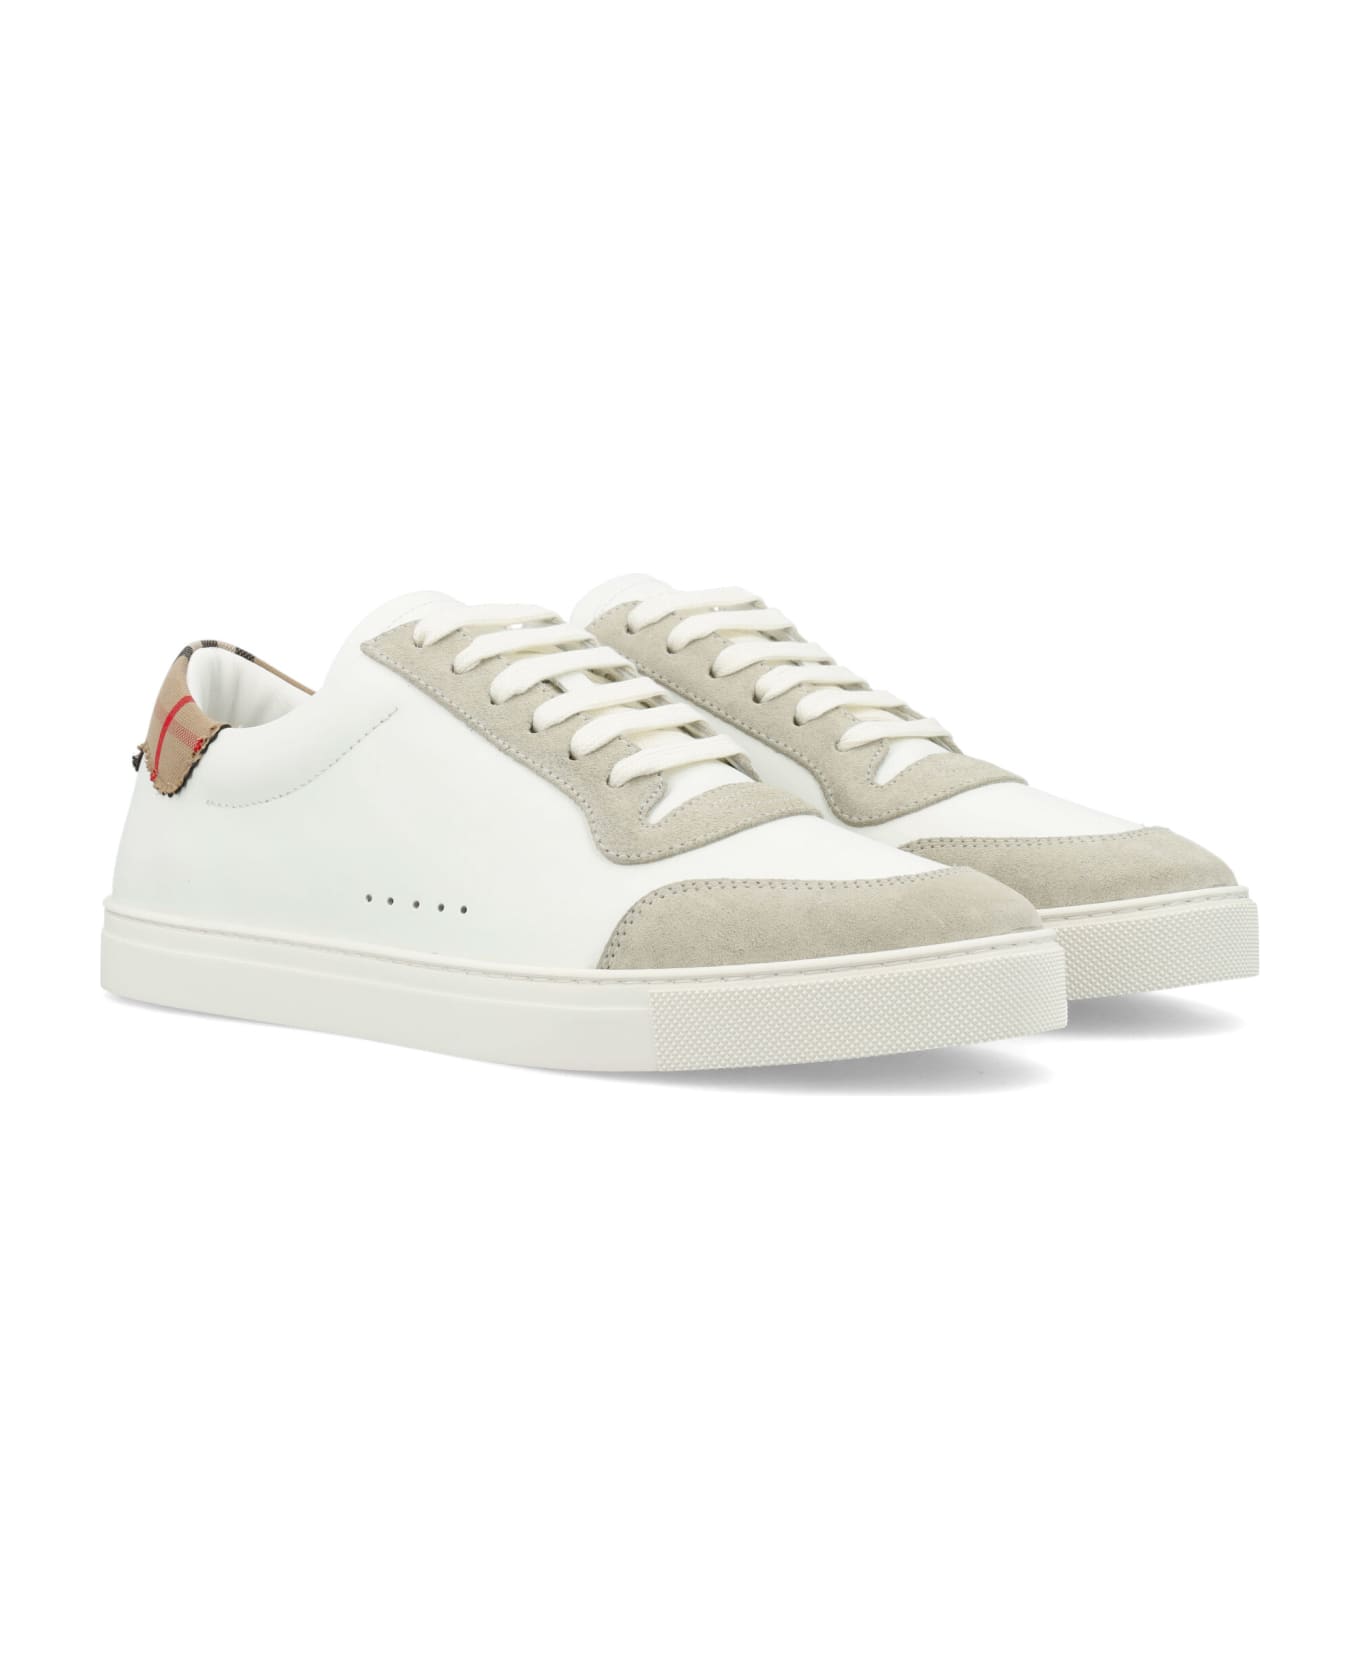 Burberry London Robin Sneakers - NEUTRAL WHITE